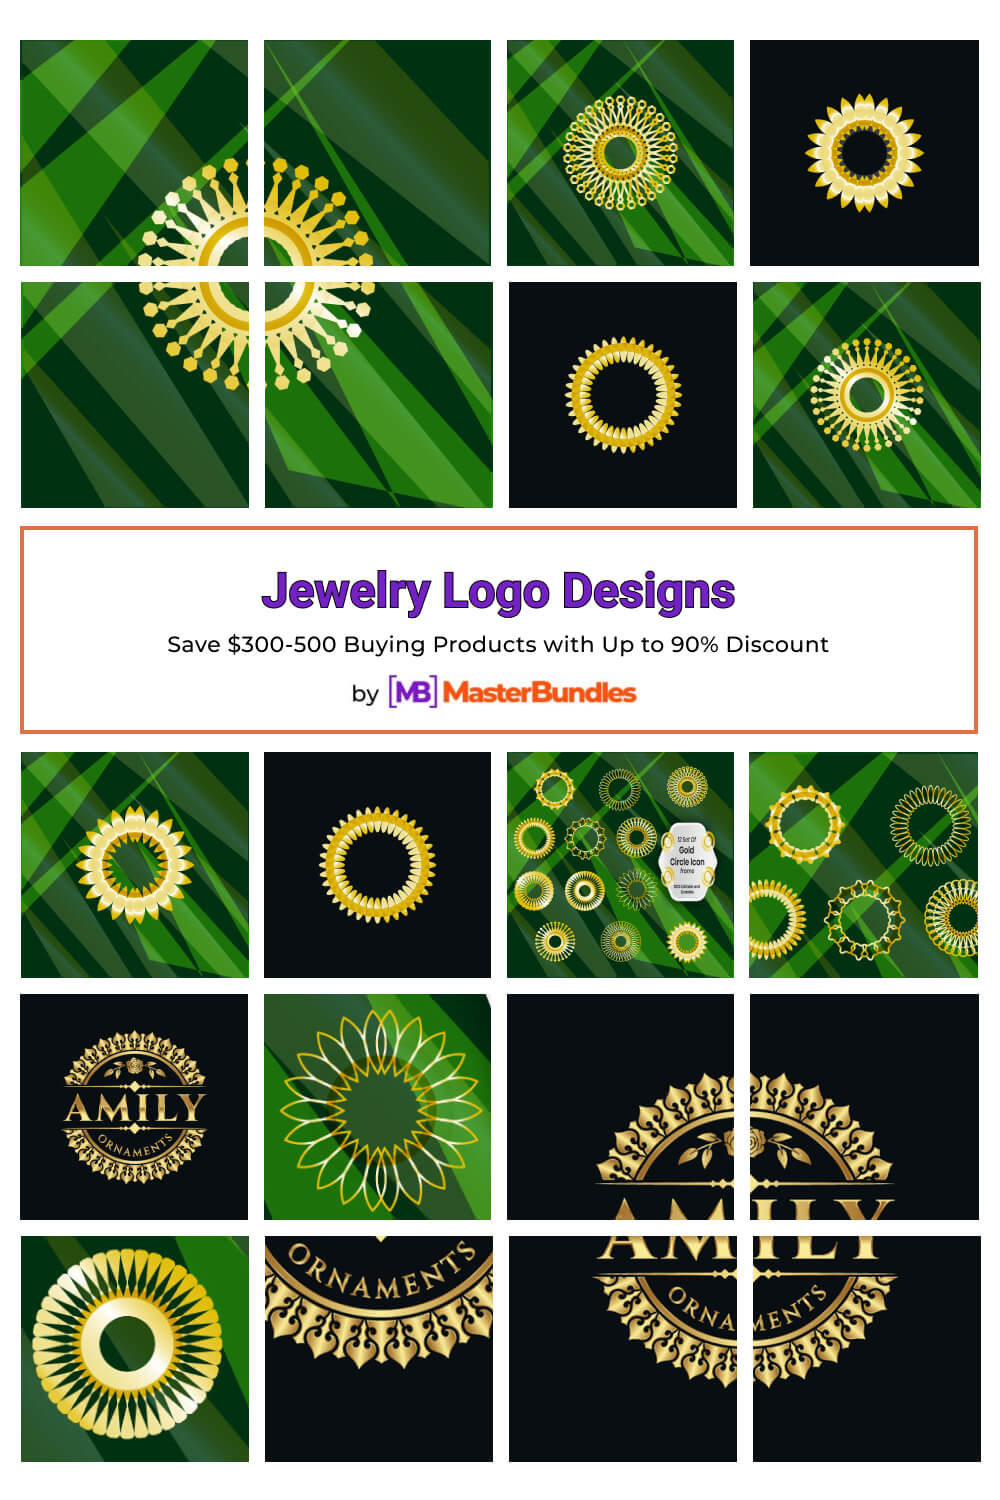 jewelry logo designs pinterest image.